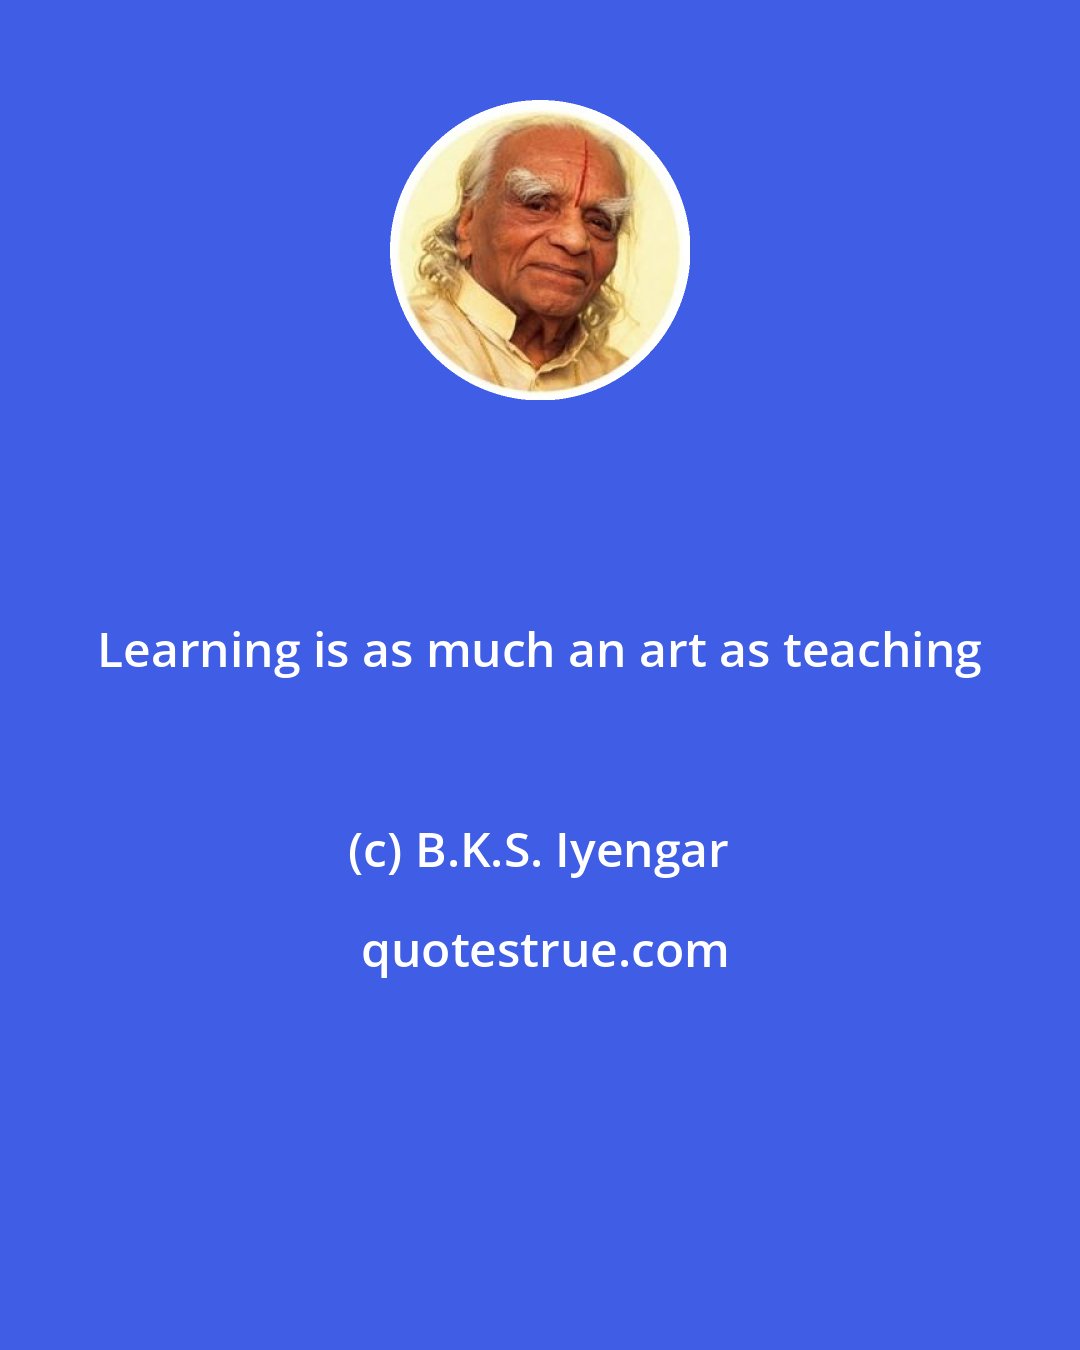 B.K.S. Iyengar: Learning is as much an art as teaching